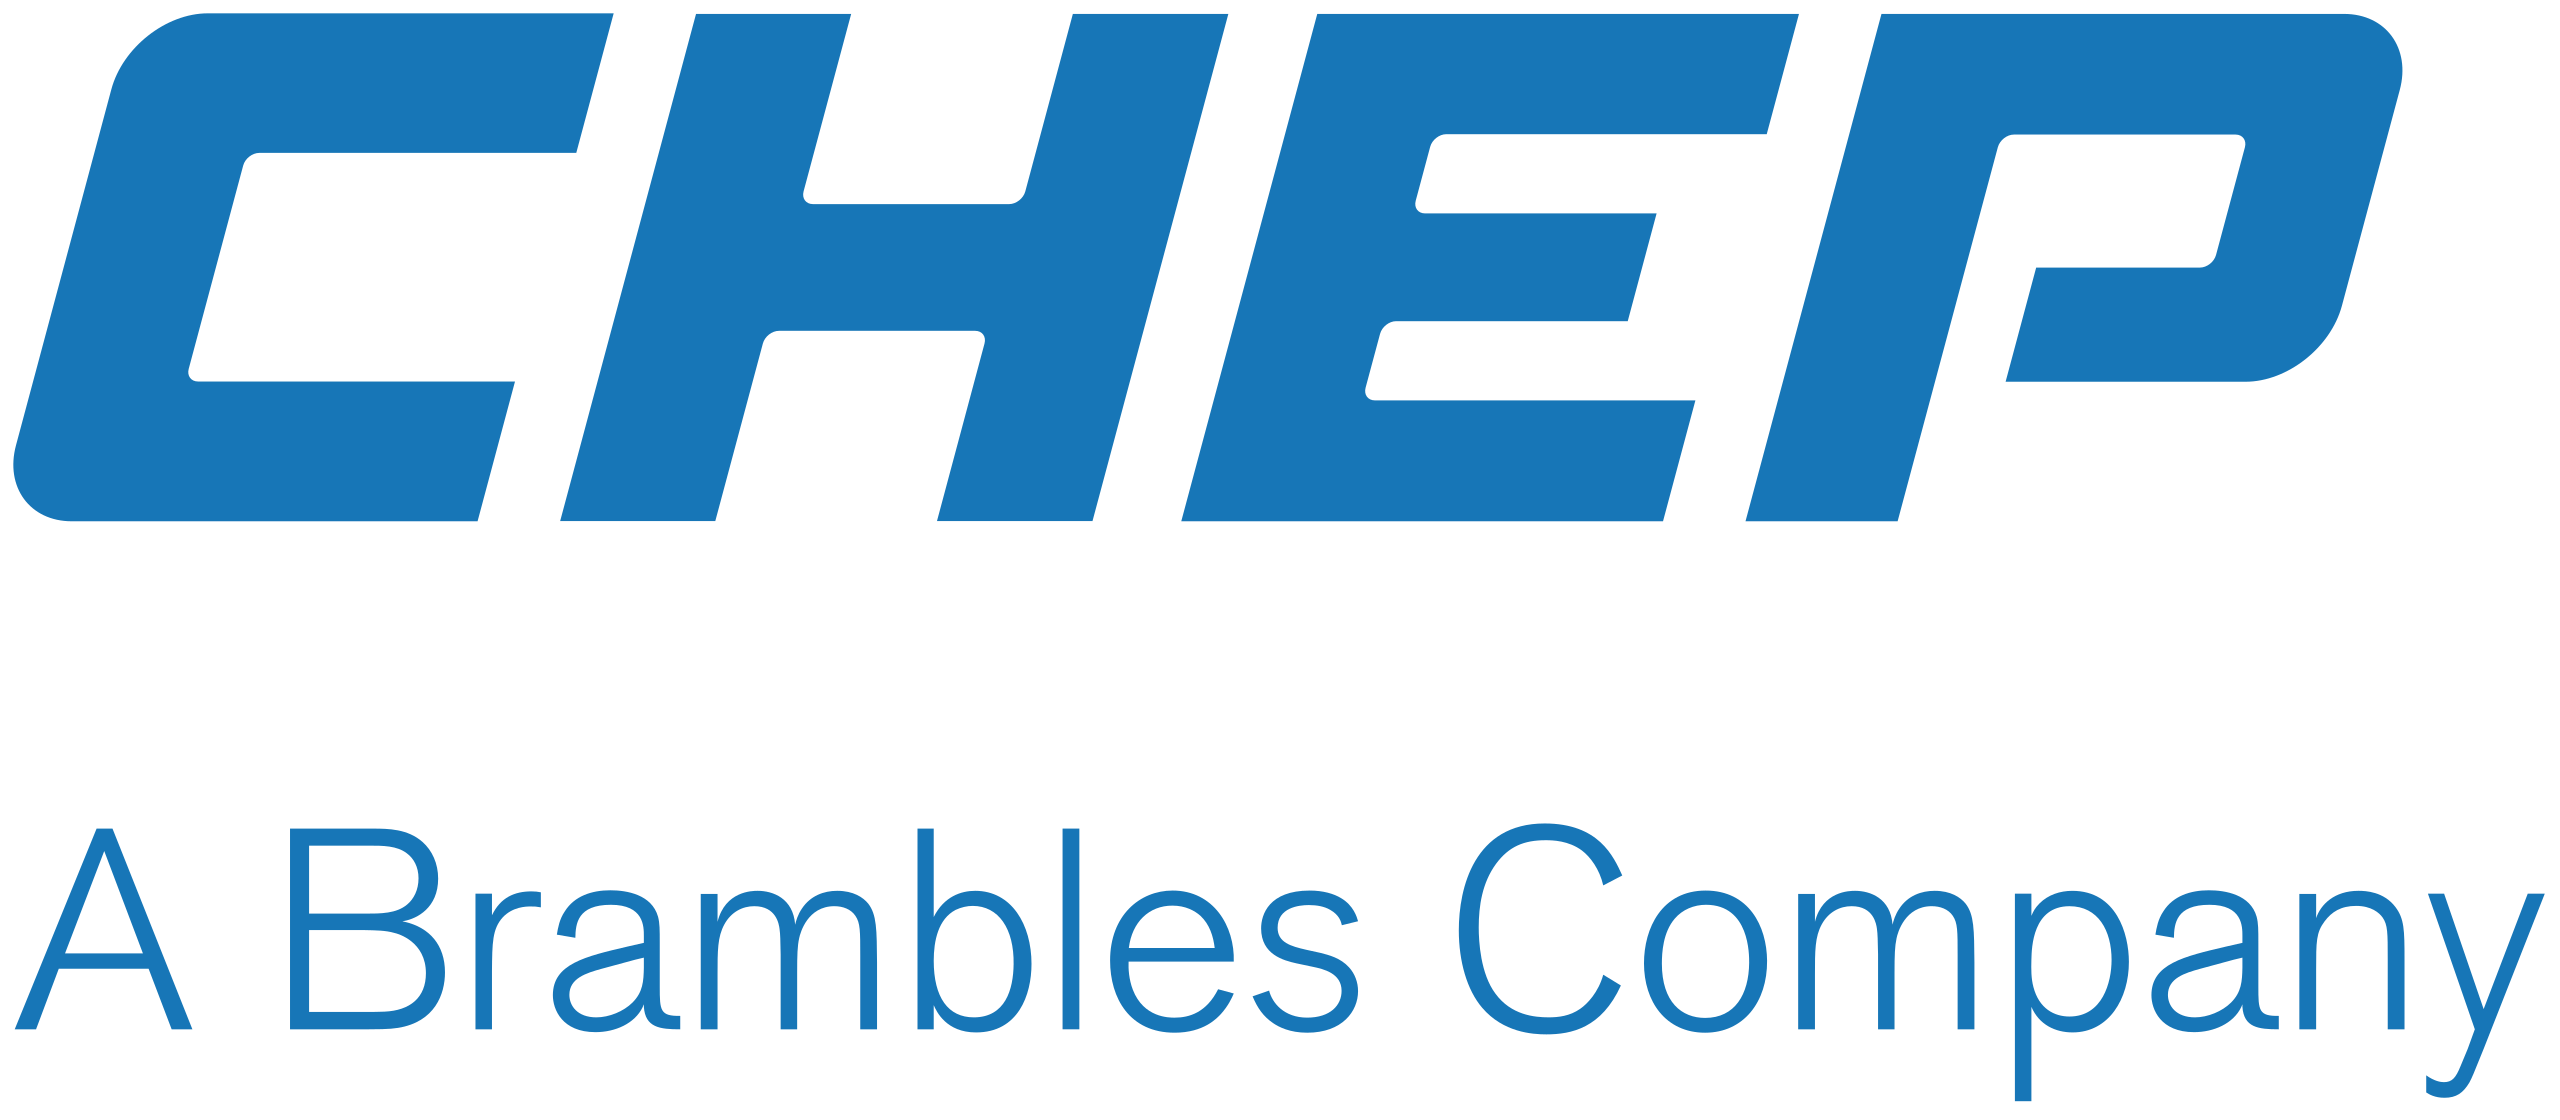 Chep Logo